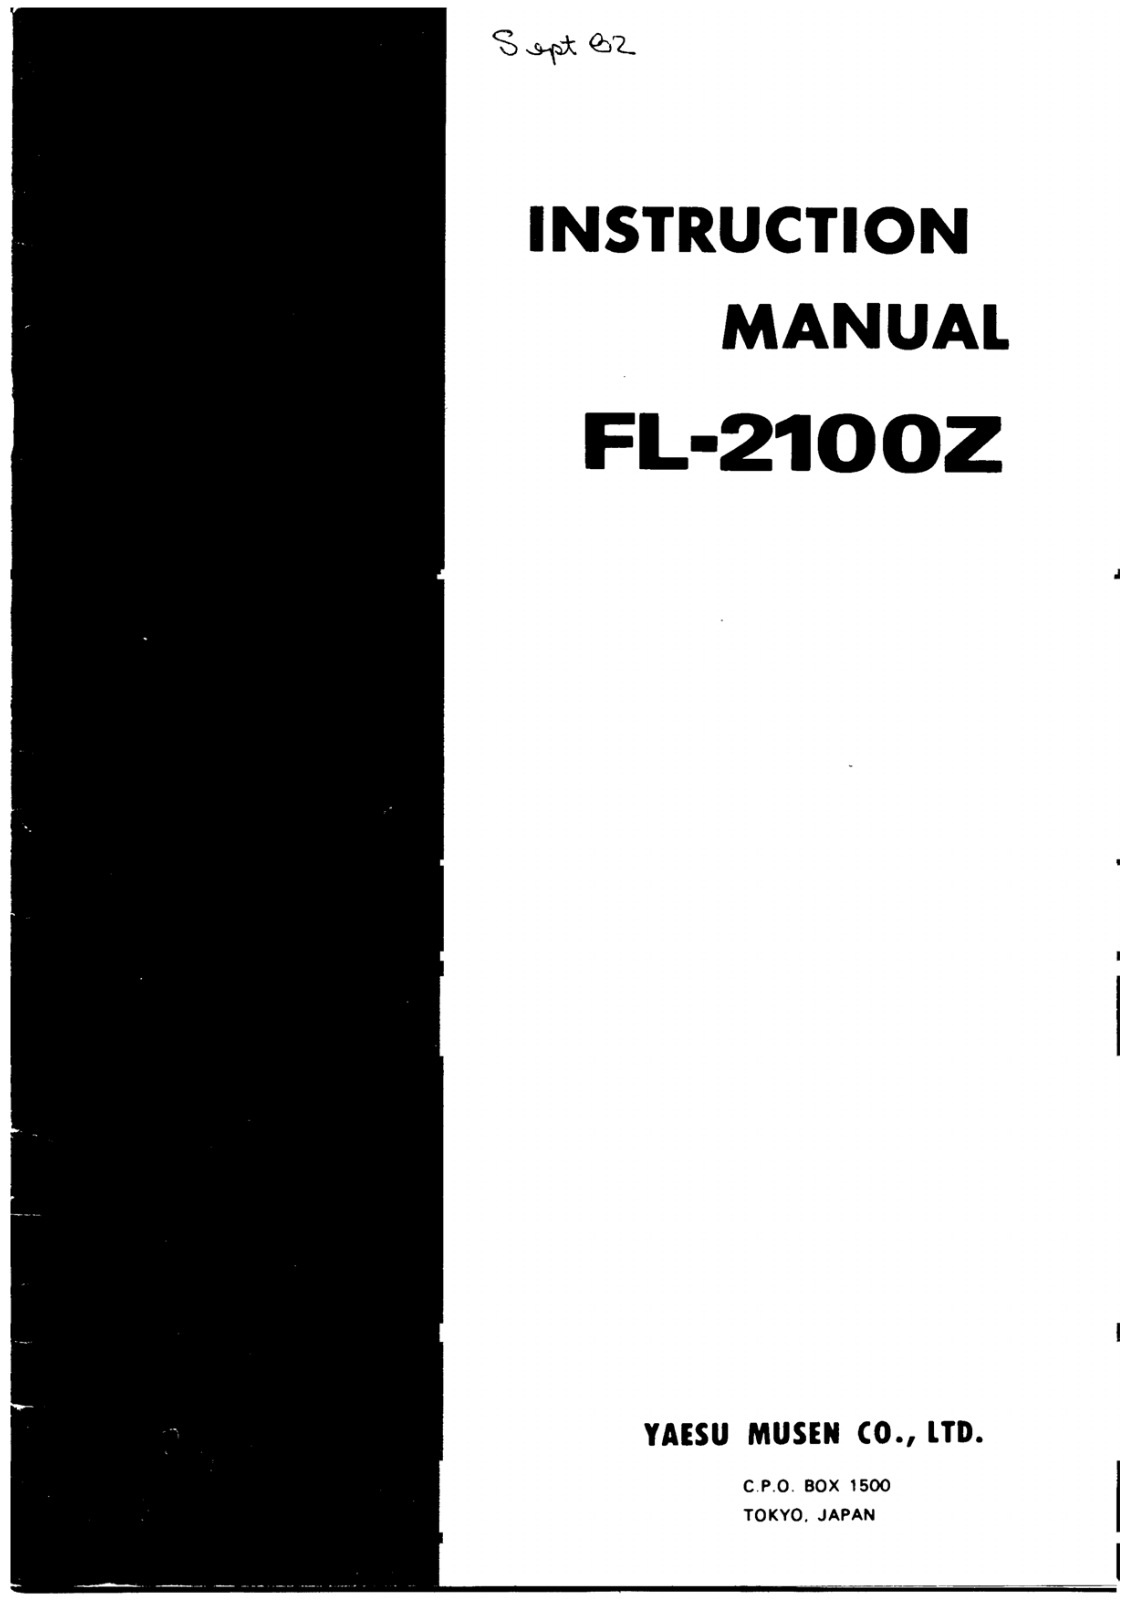 YAESU FL-2100Z User Manual